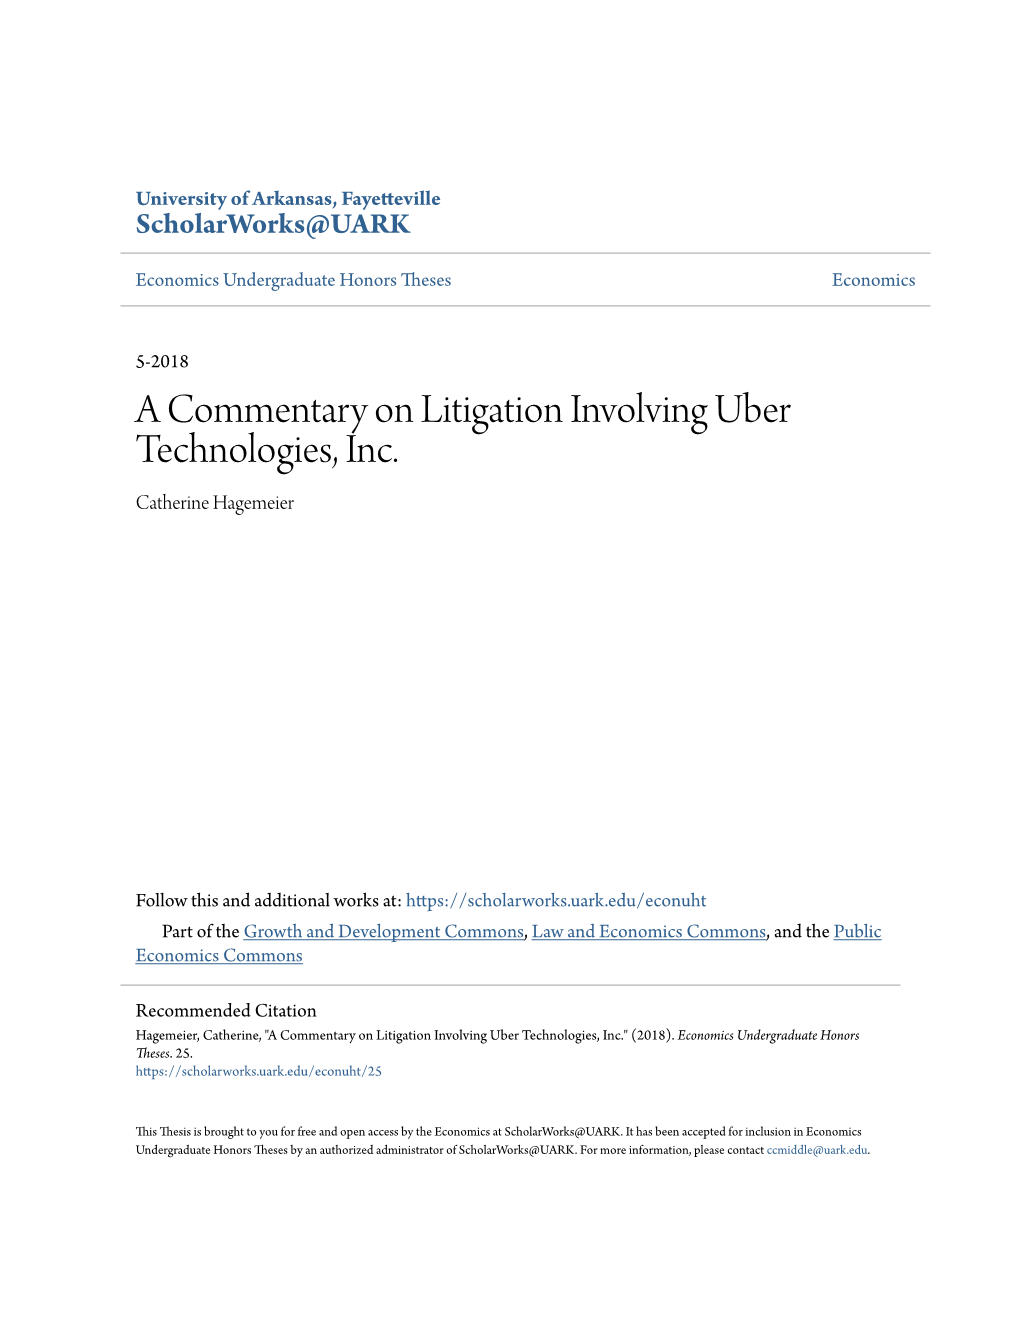 A Commentary on Litigation Involving Uber Technologies, Inc. Catherine Hagemeier